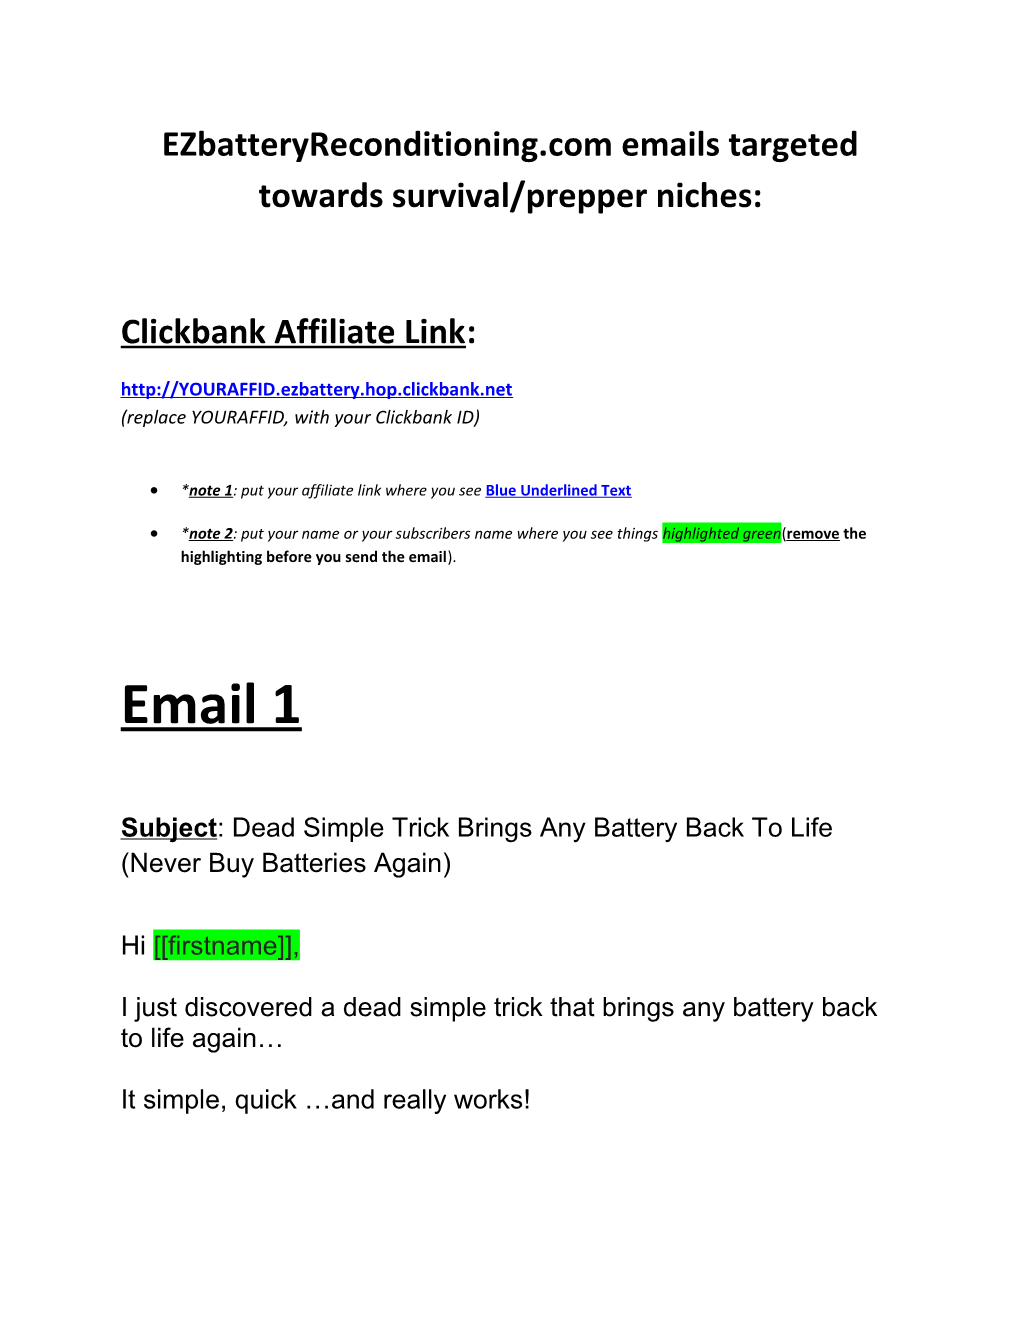 Ezbatteryreconditioning.Com Emails Targeted Towards Survival/Prepper Niches